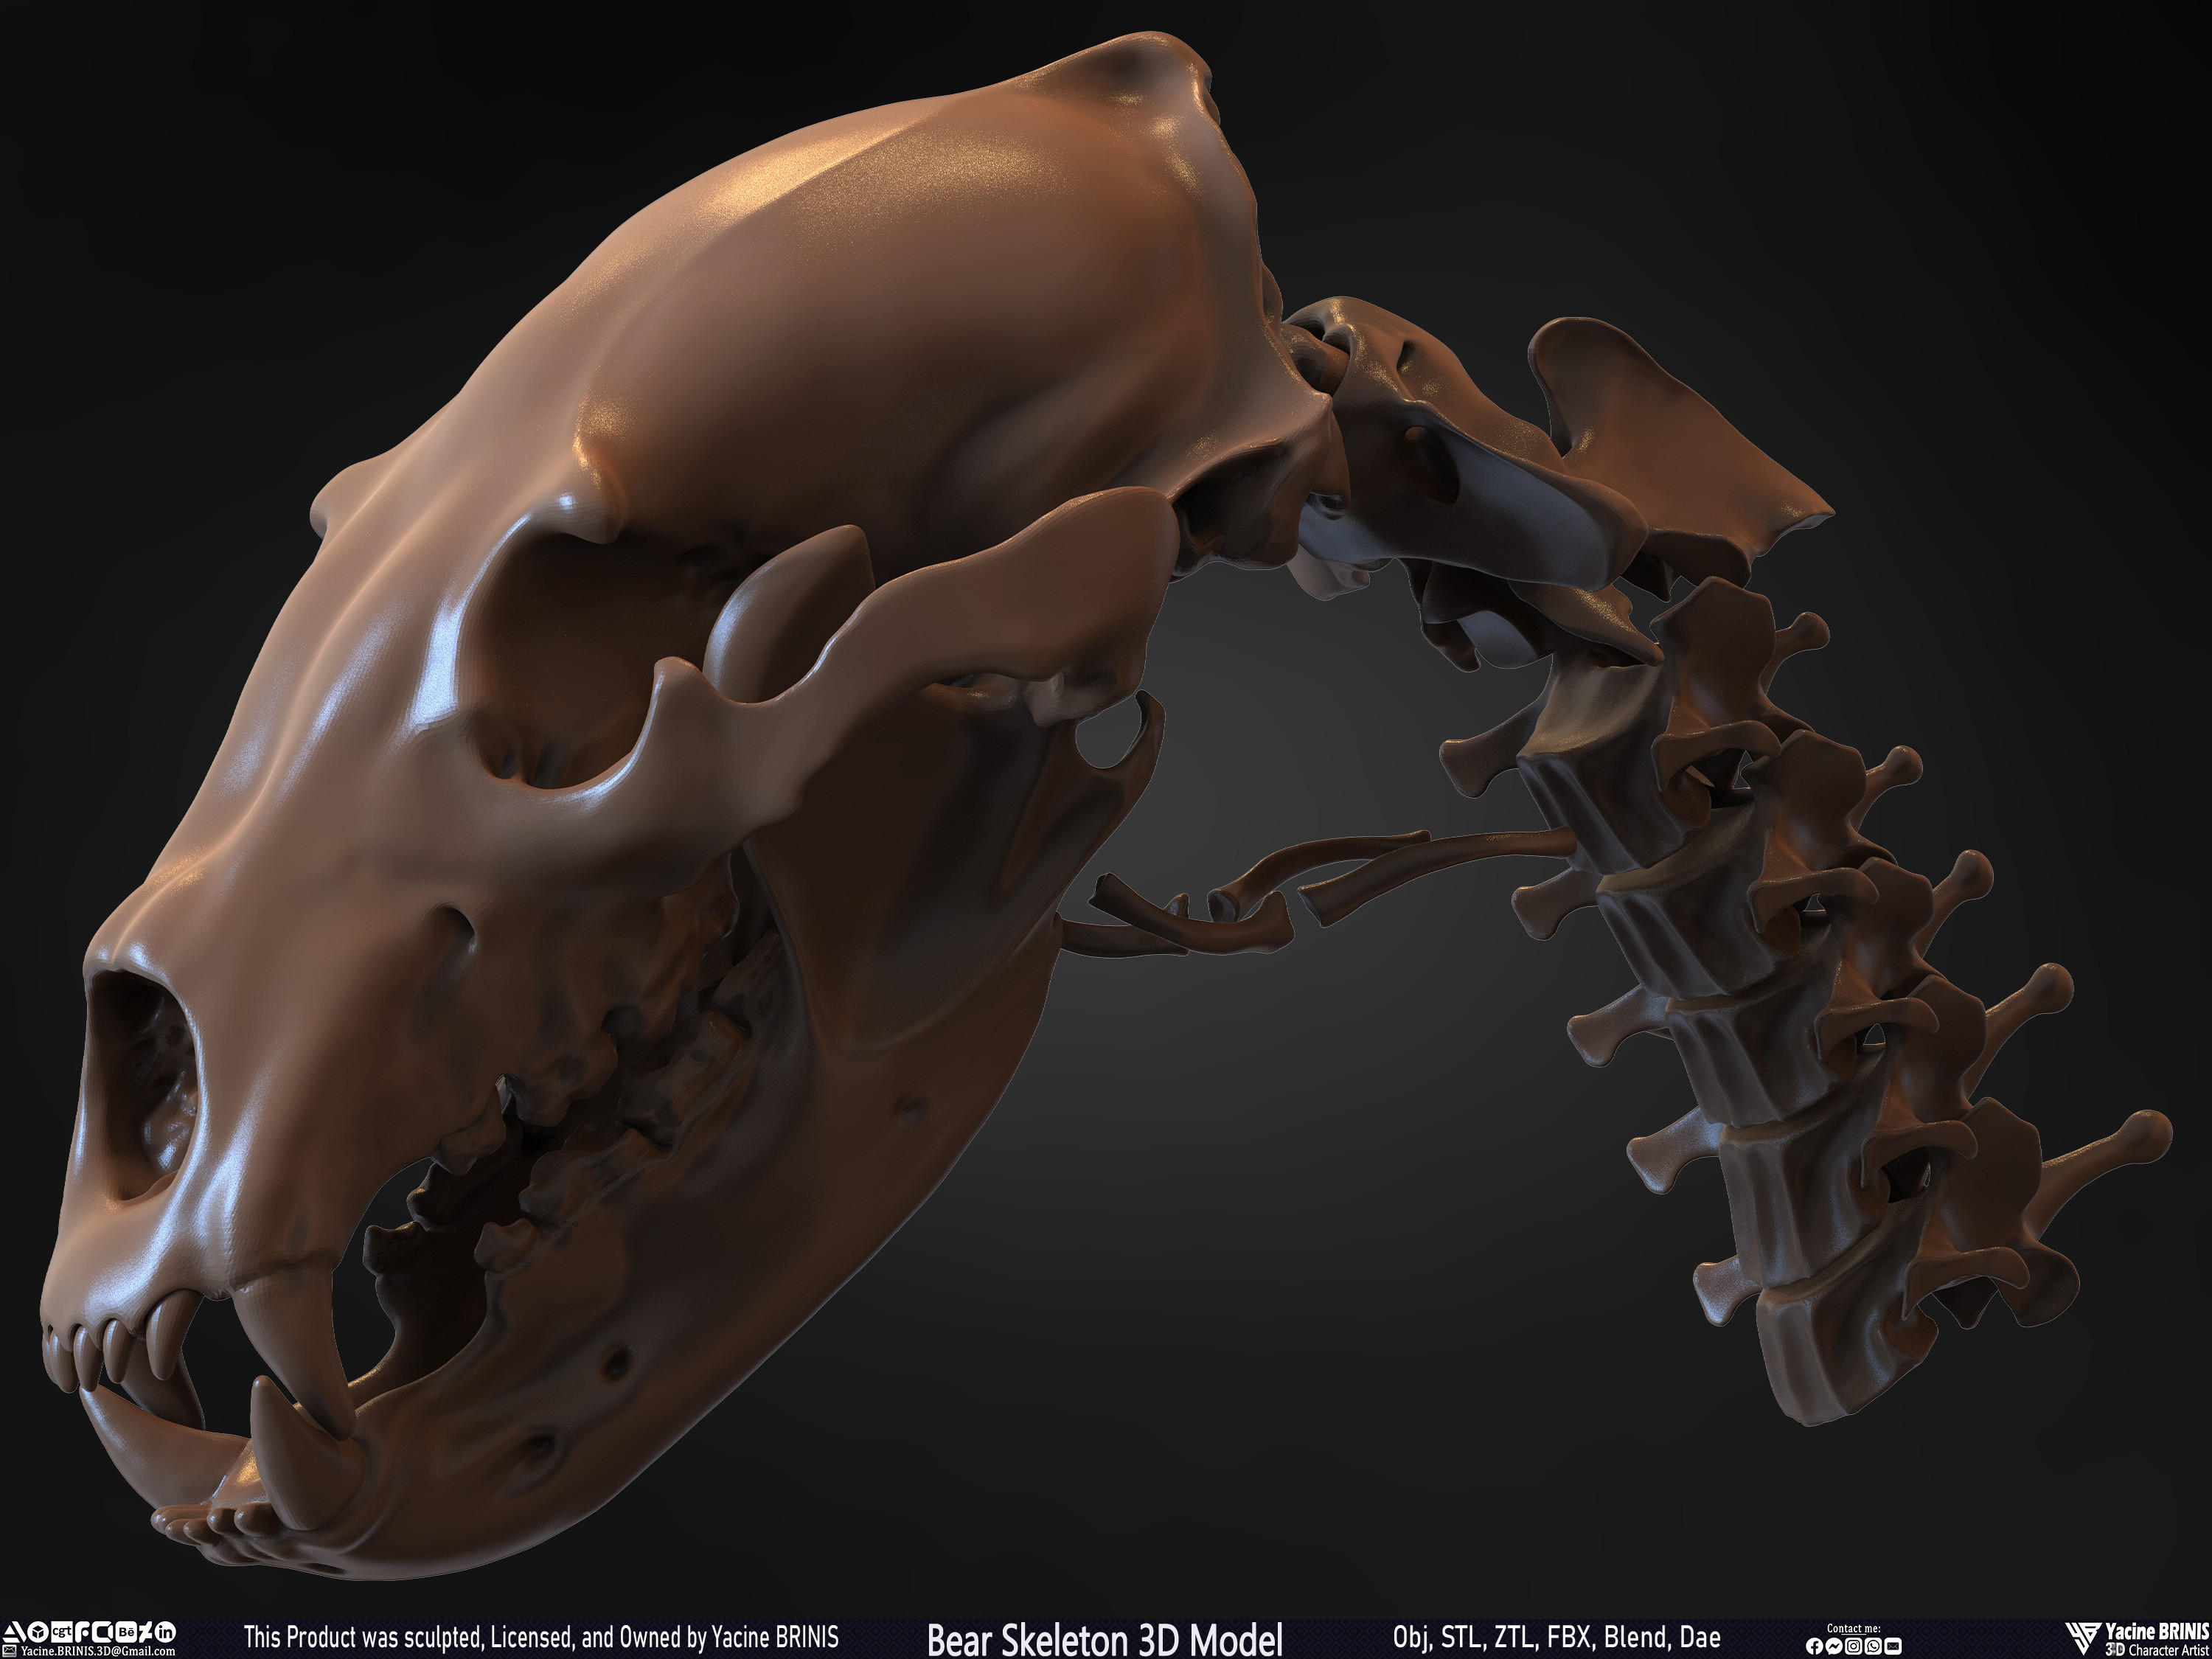 Bear Skeleton 3D Model Sculpted by Yacine BRINIS Set 033